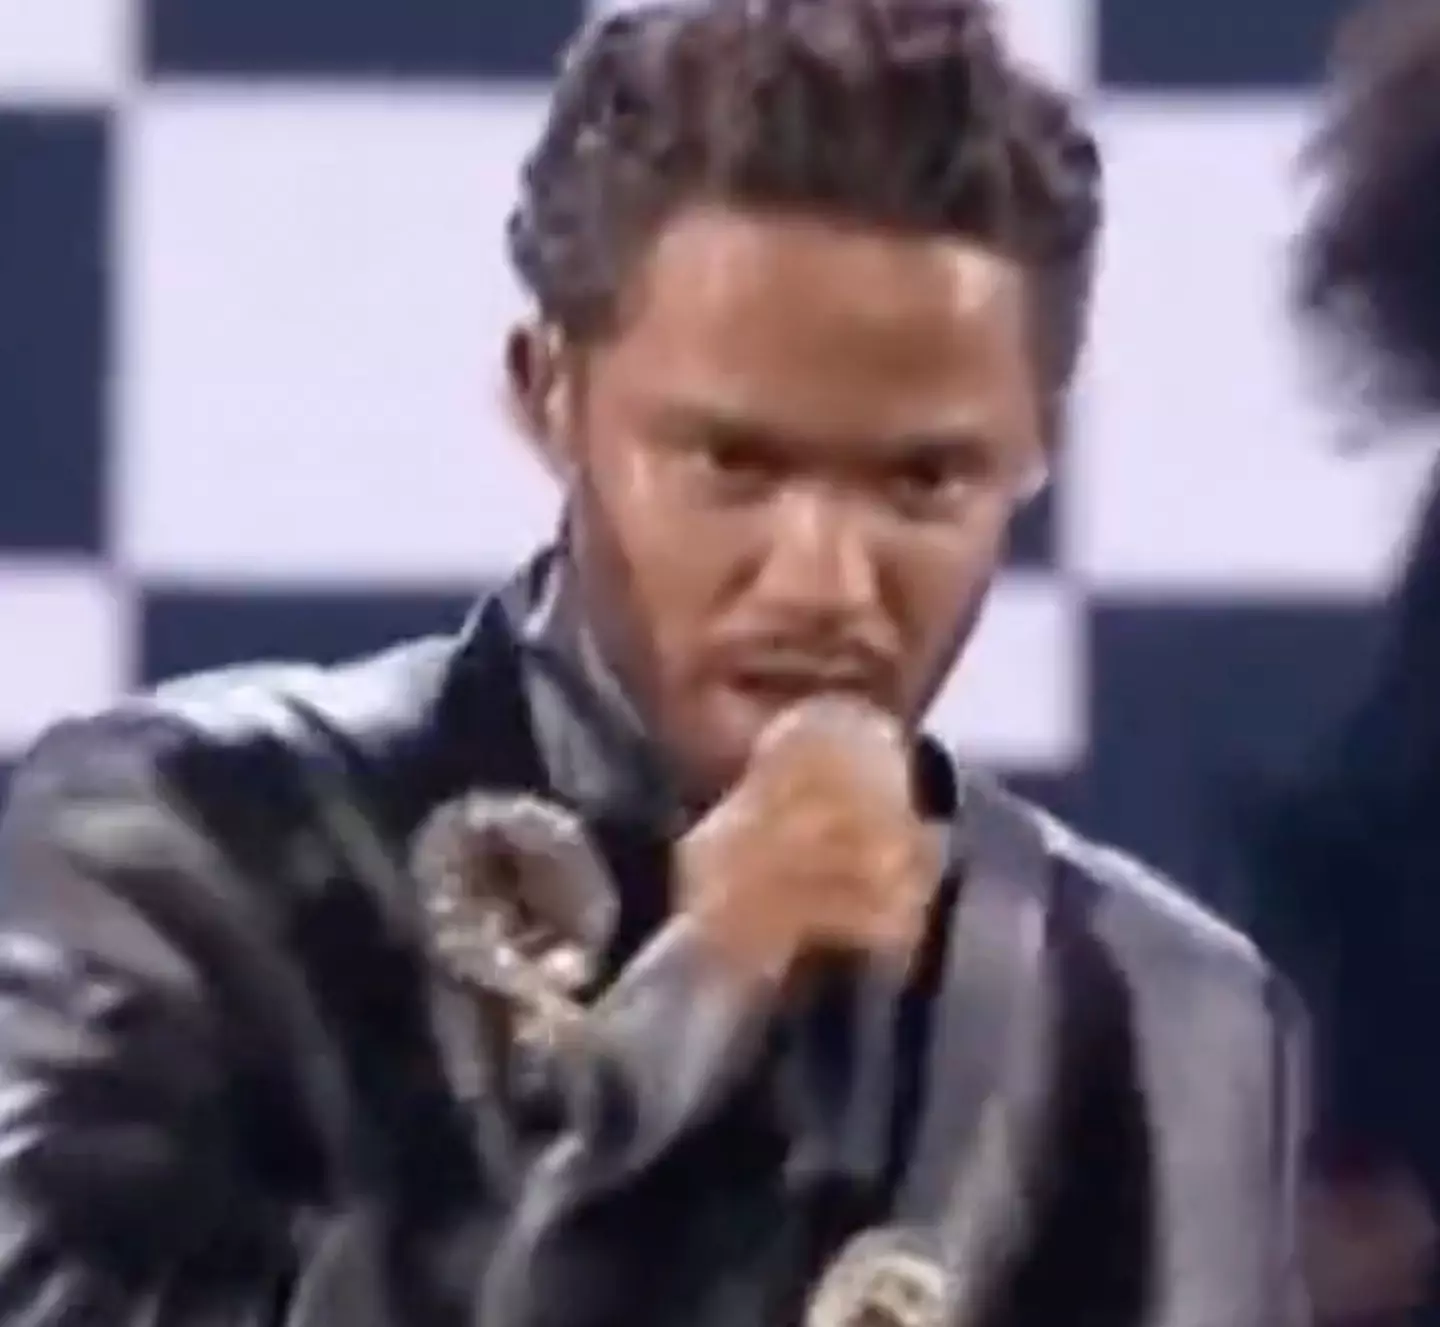 Kuba Szmajkowski used blackface to imitate Kendrick Lamar.